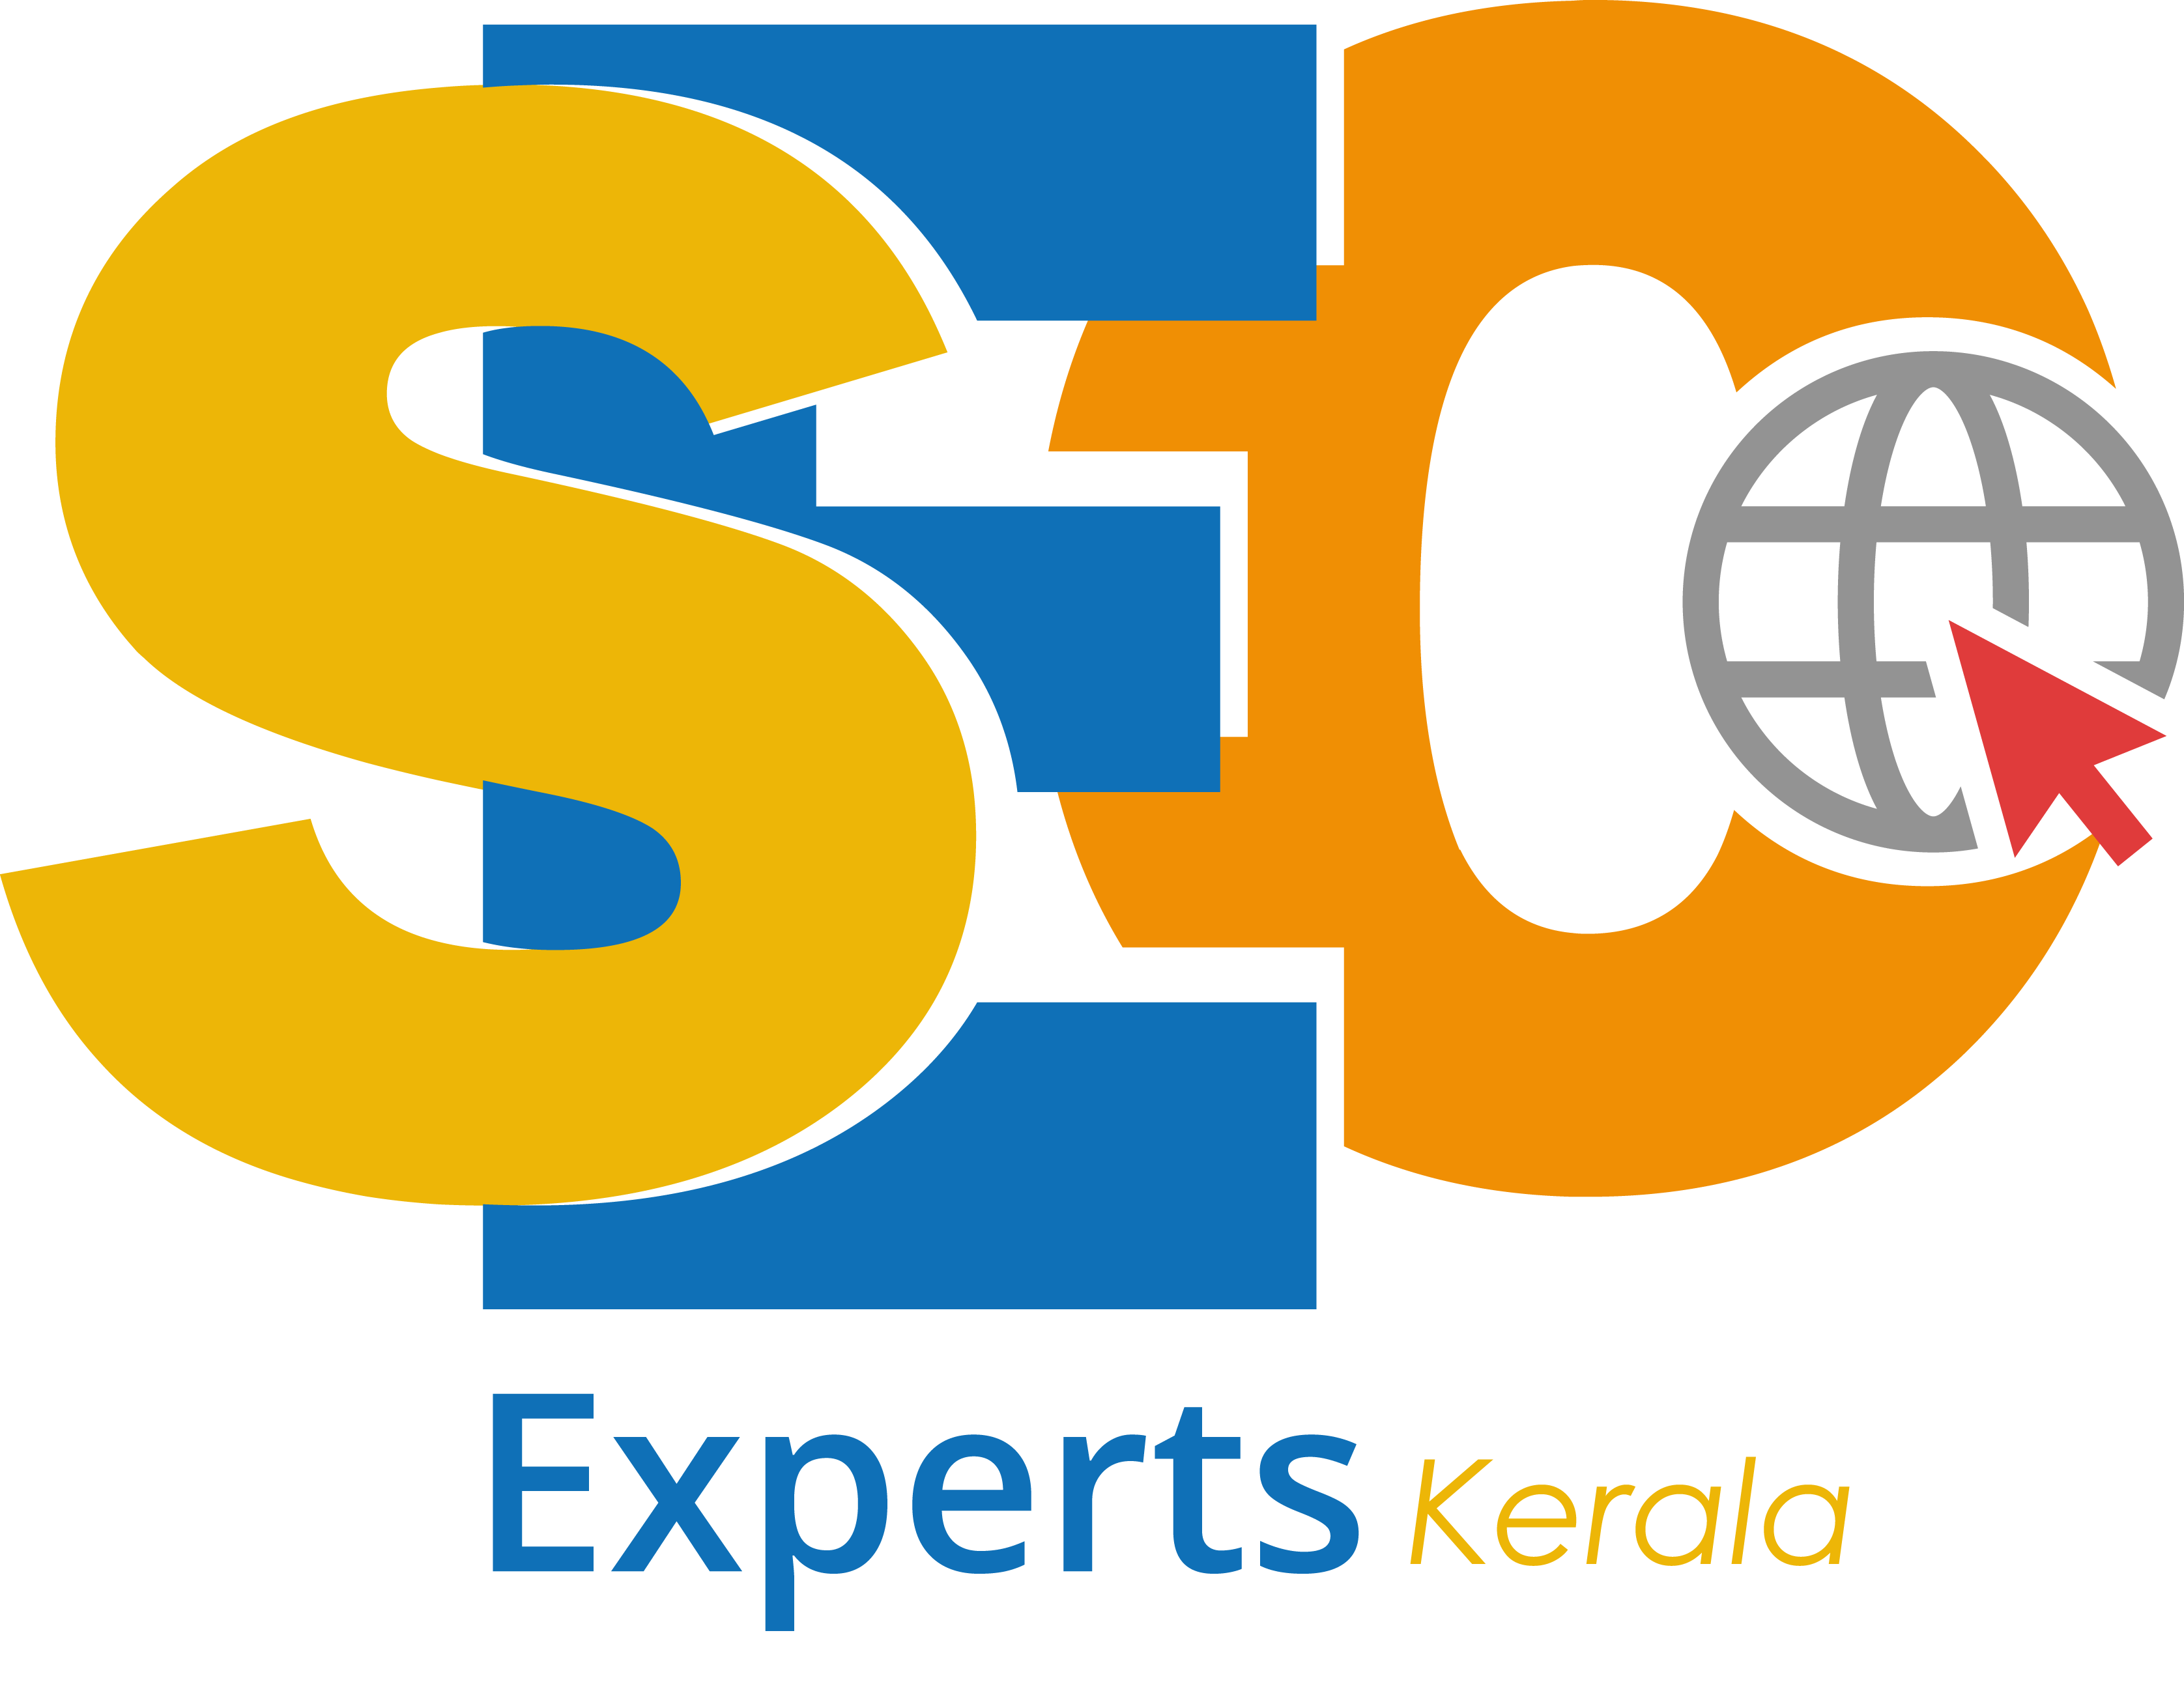 SEO Services in Kerala